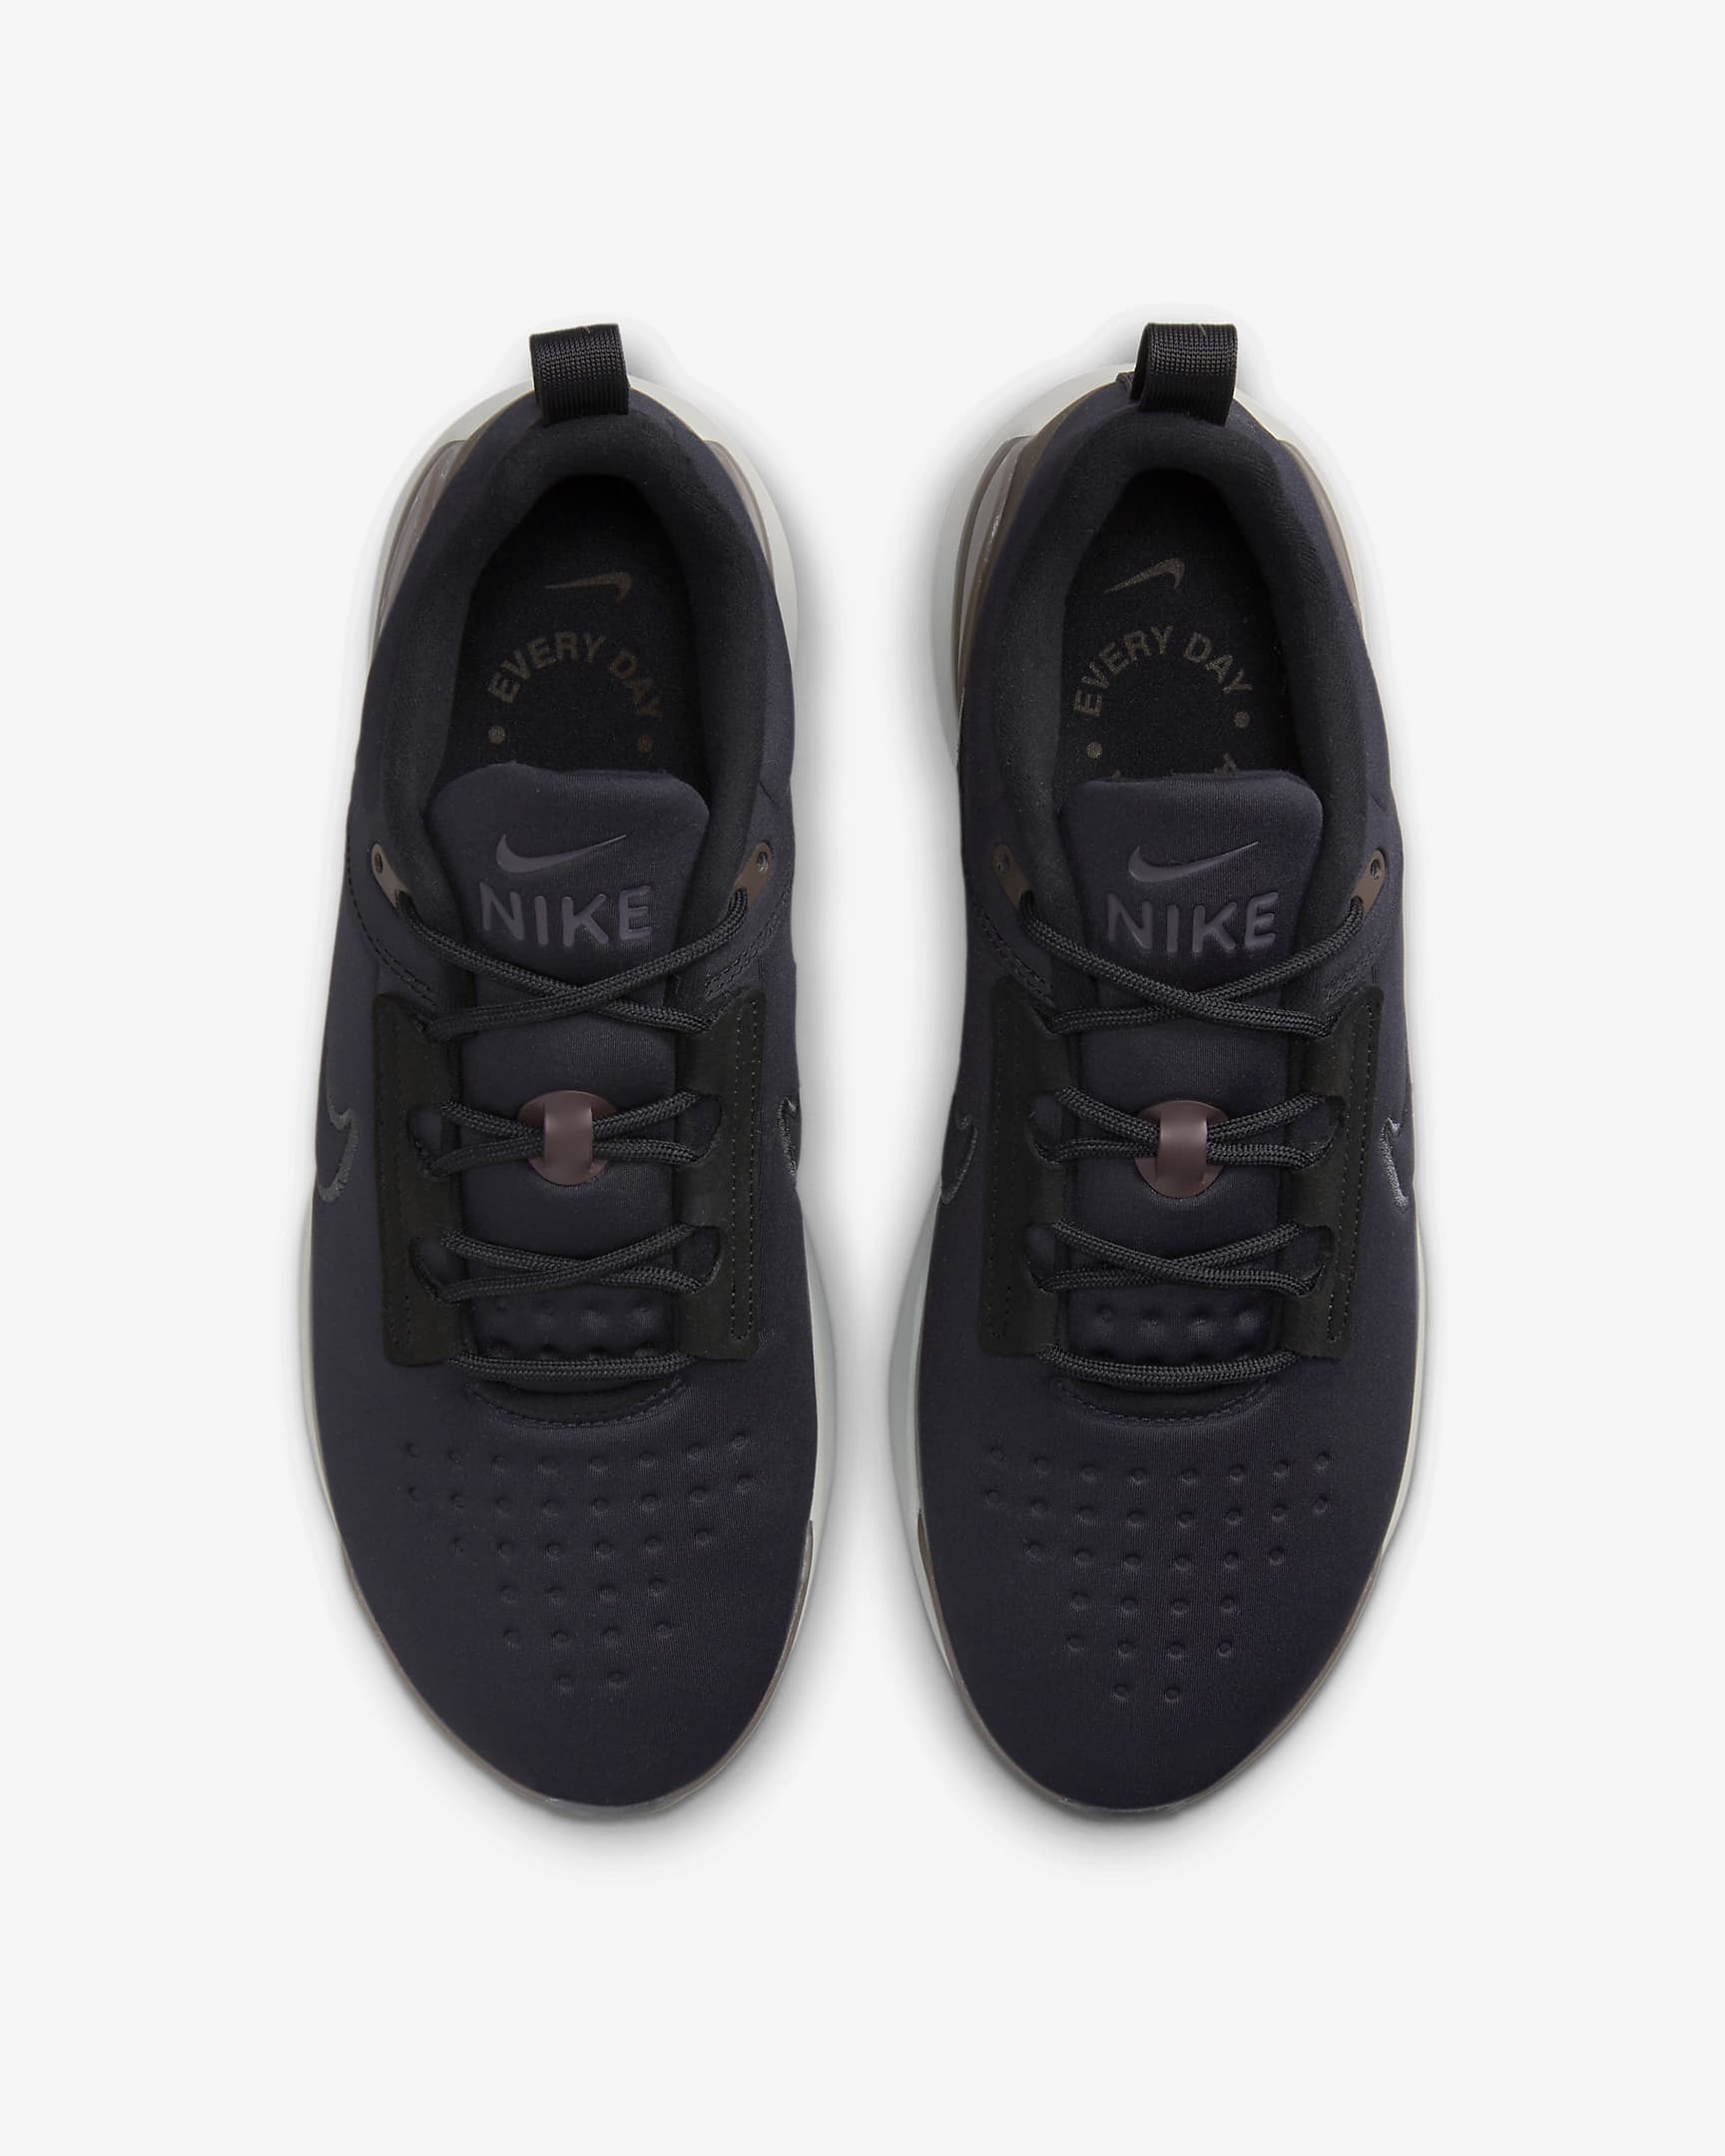 Nike E-Series 1.0 Men's Shoes - Black/Anthracite/Earth/Black